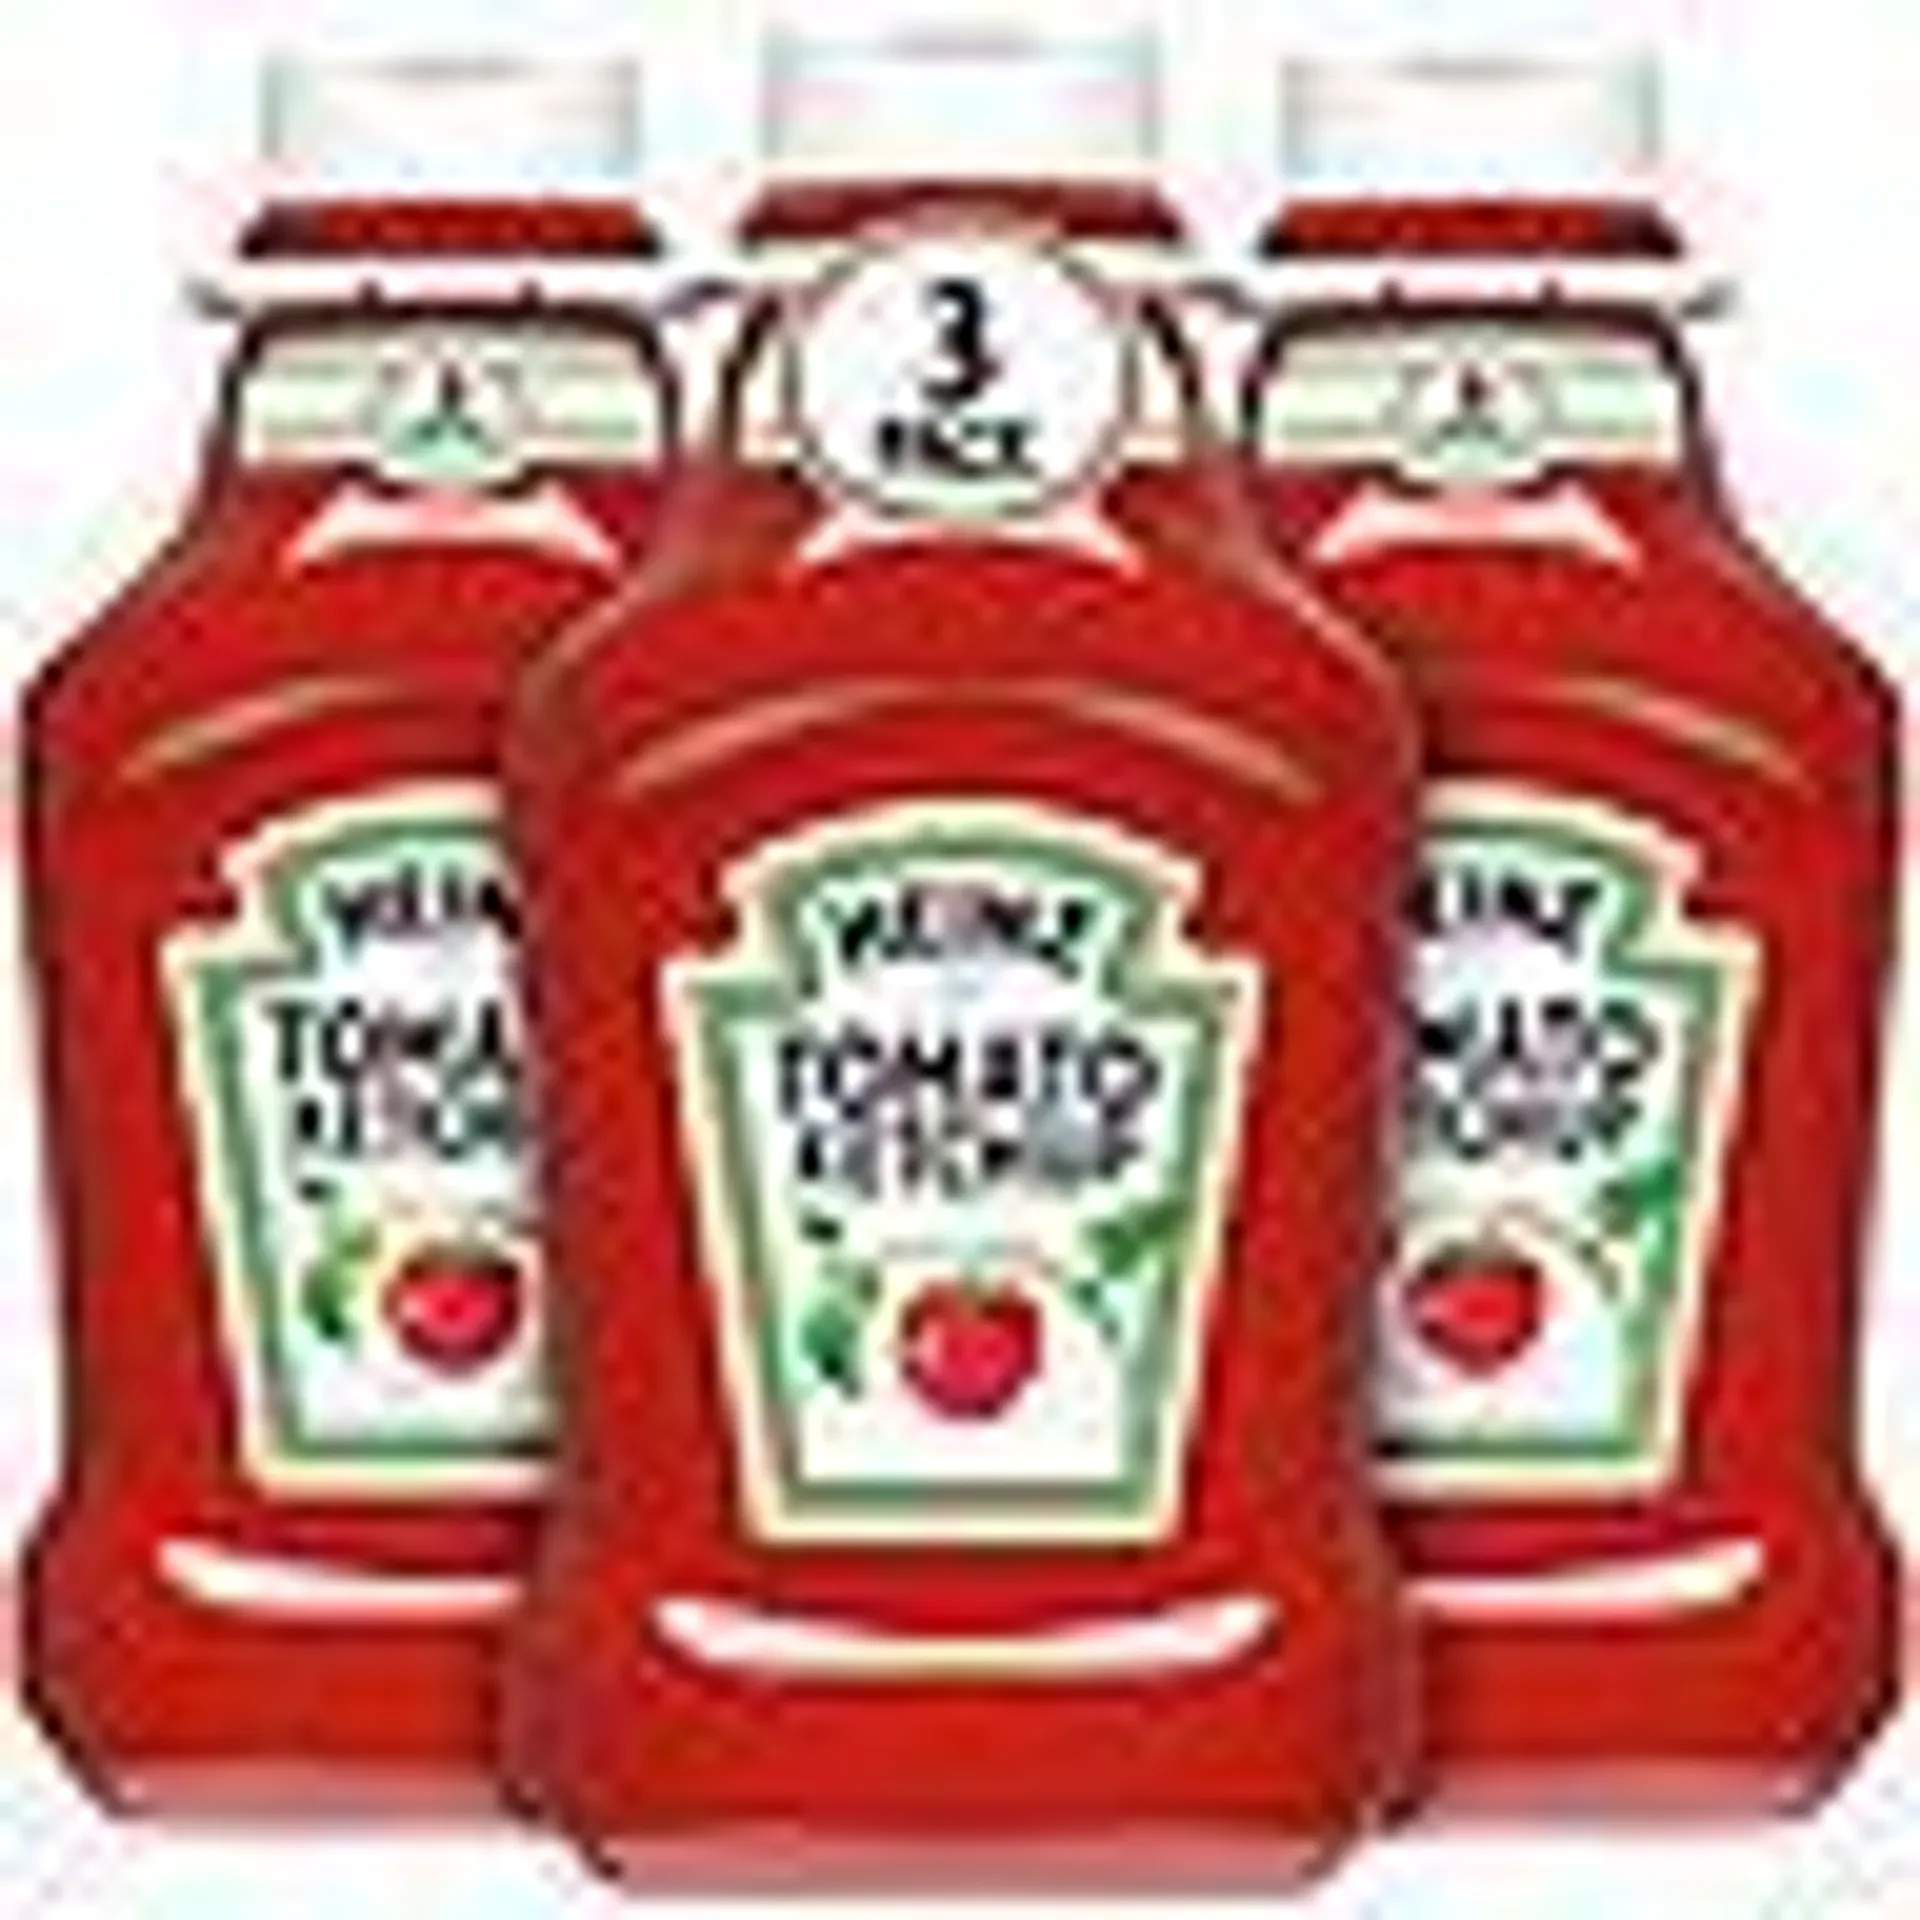 Heinz Original Tomato Ketchup Bottles, 44 oz., 3 pk.